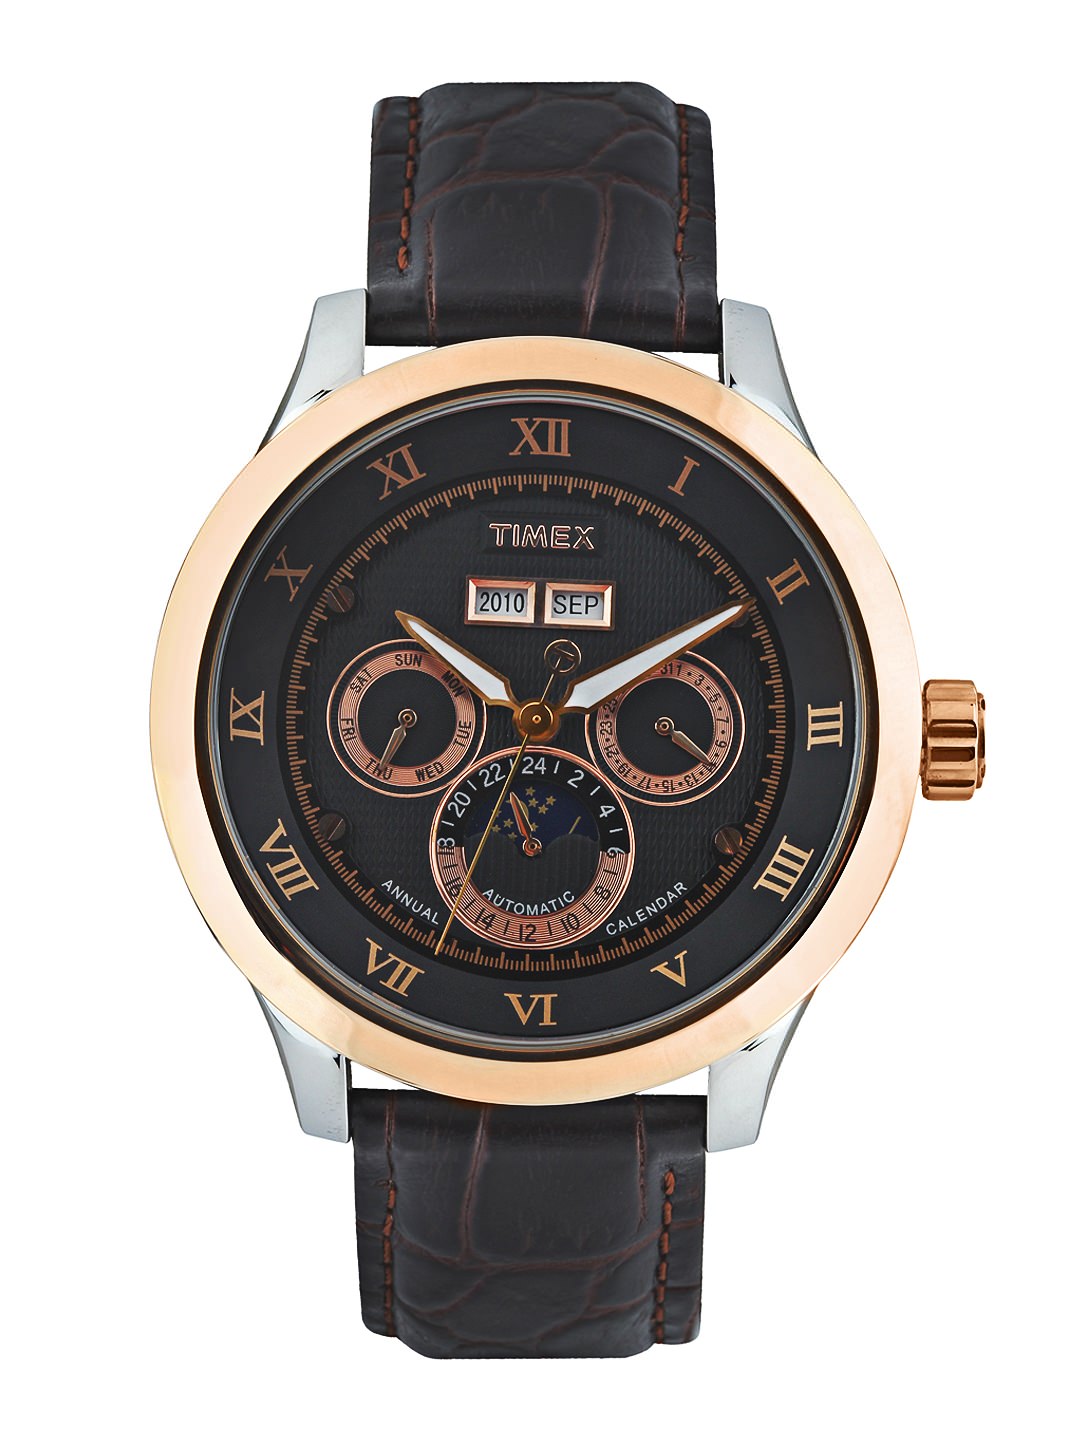 Timex Men Black Dial Watch